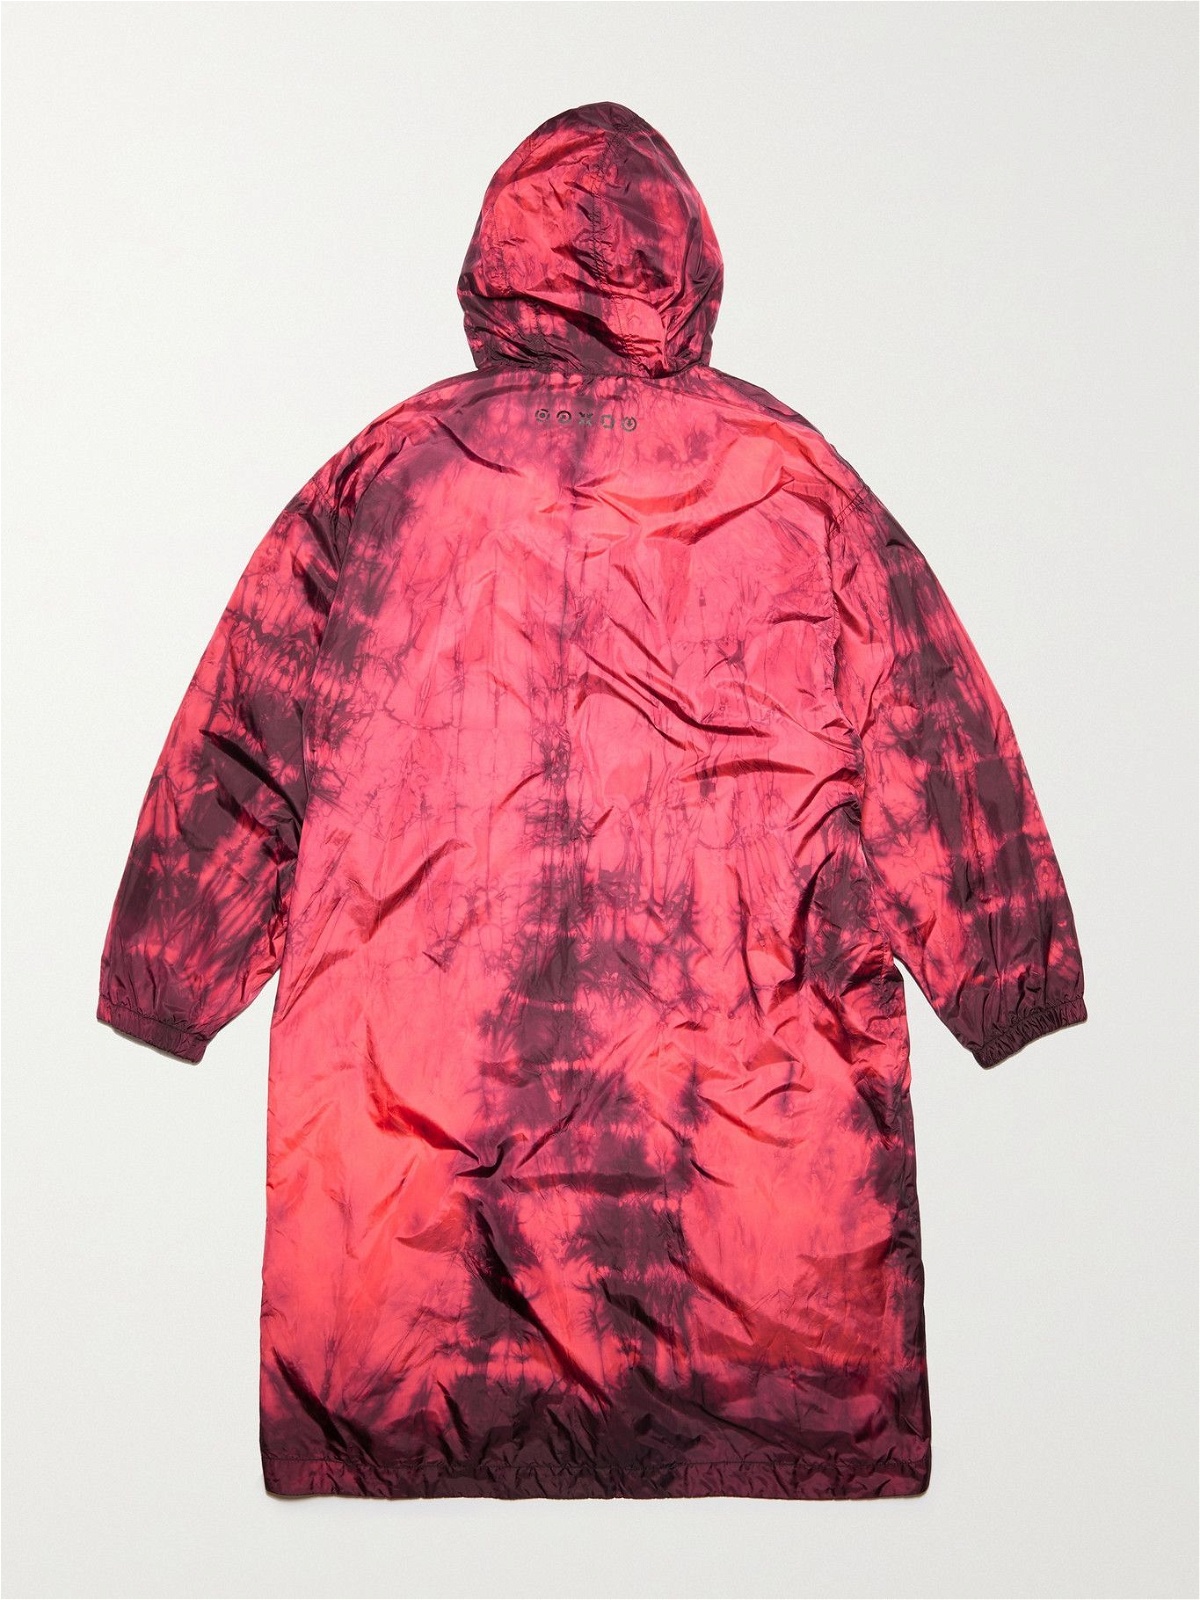 ACNE STUDIOS - Oreti Tie-Dyed Nylon Hooded Jacket - Pink